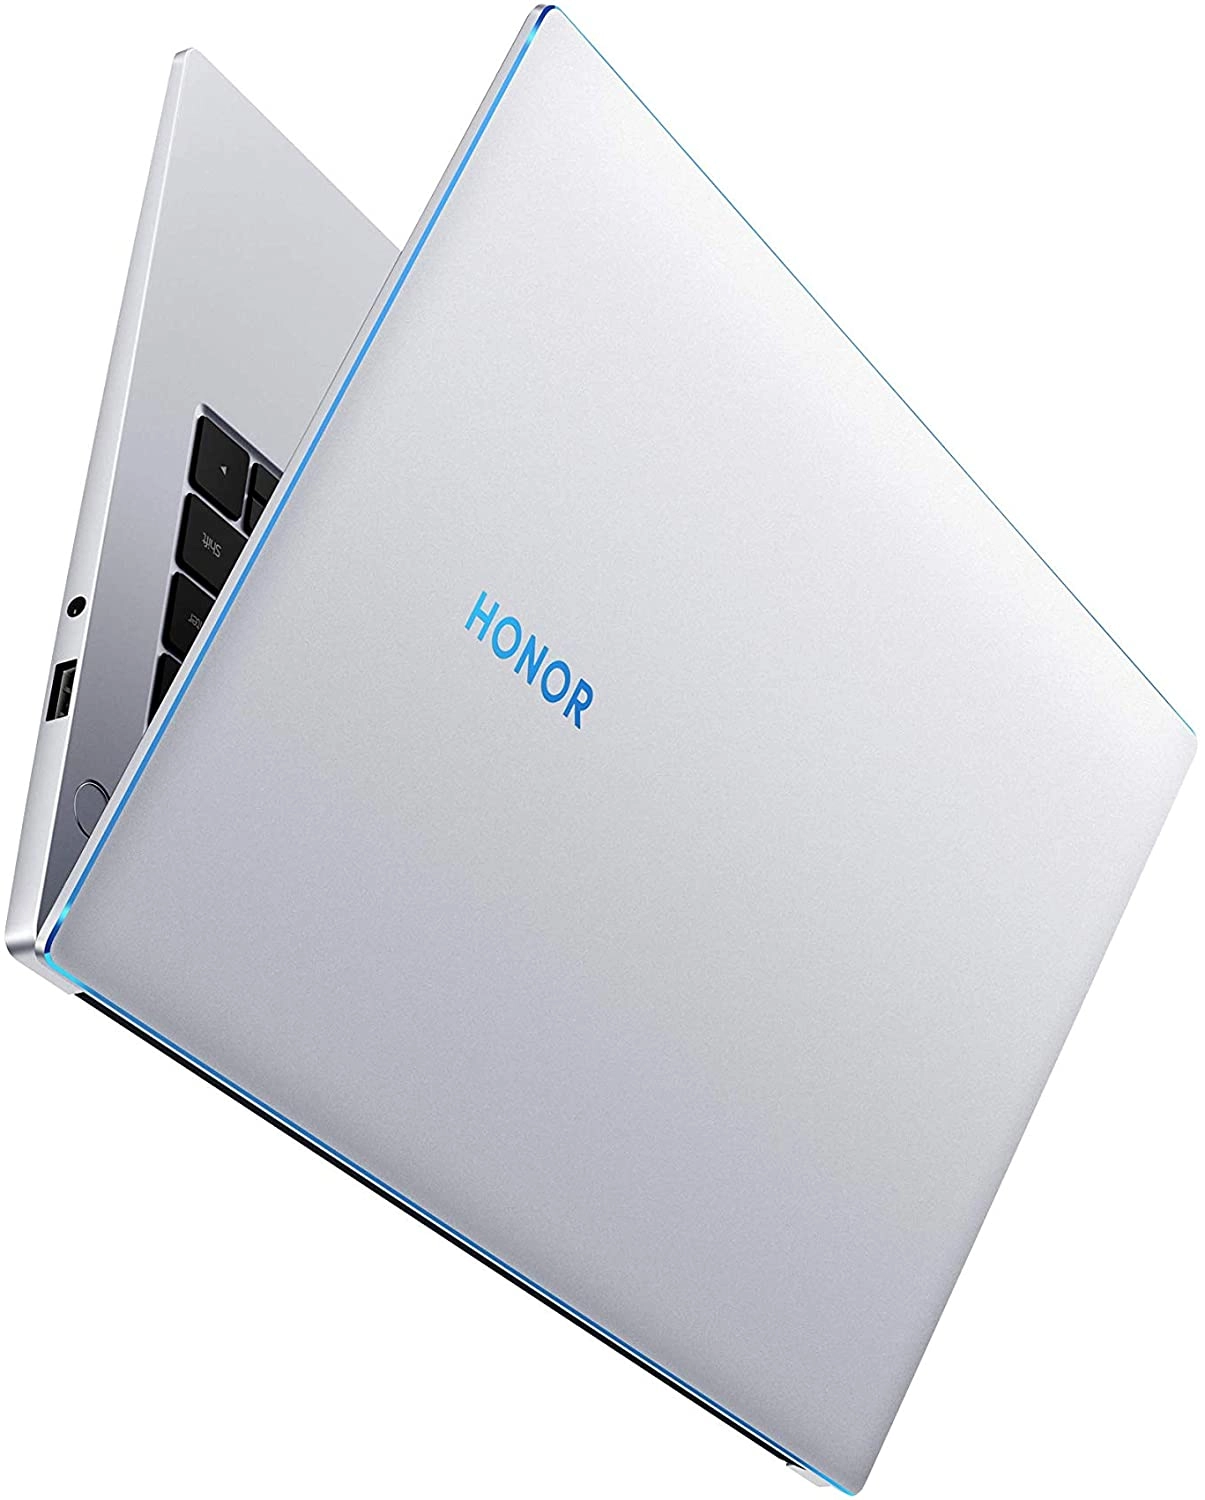 HONOR MagicBook 14 R5 3500U+8/256GB, Win 10 - Mystic Silver laptop image